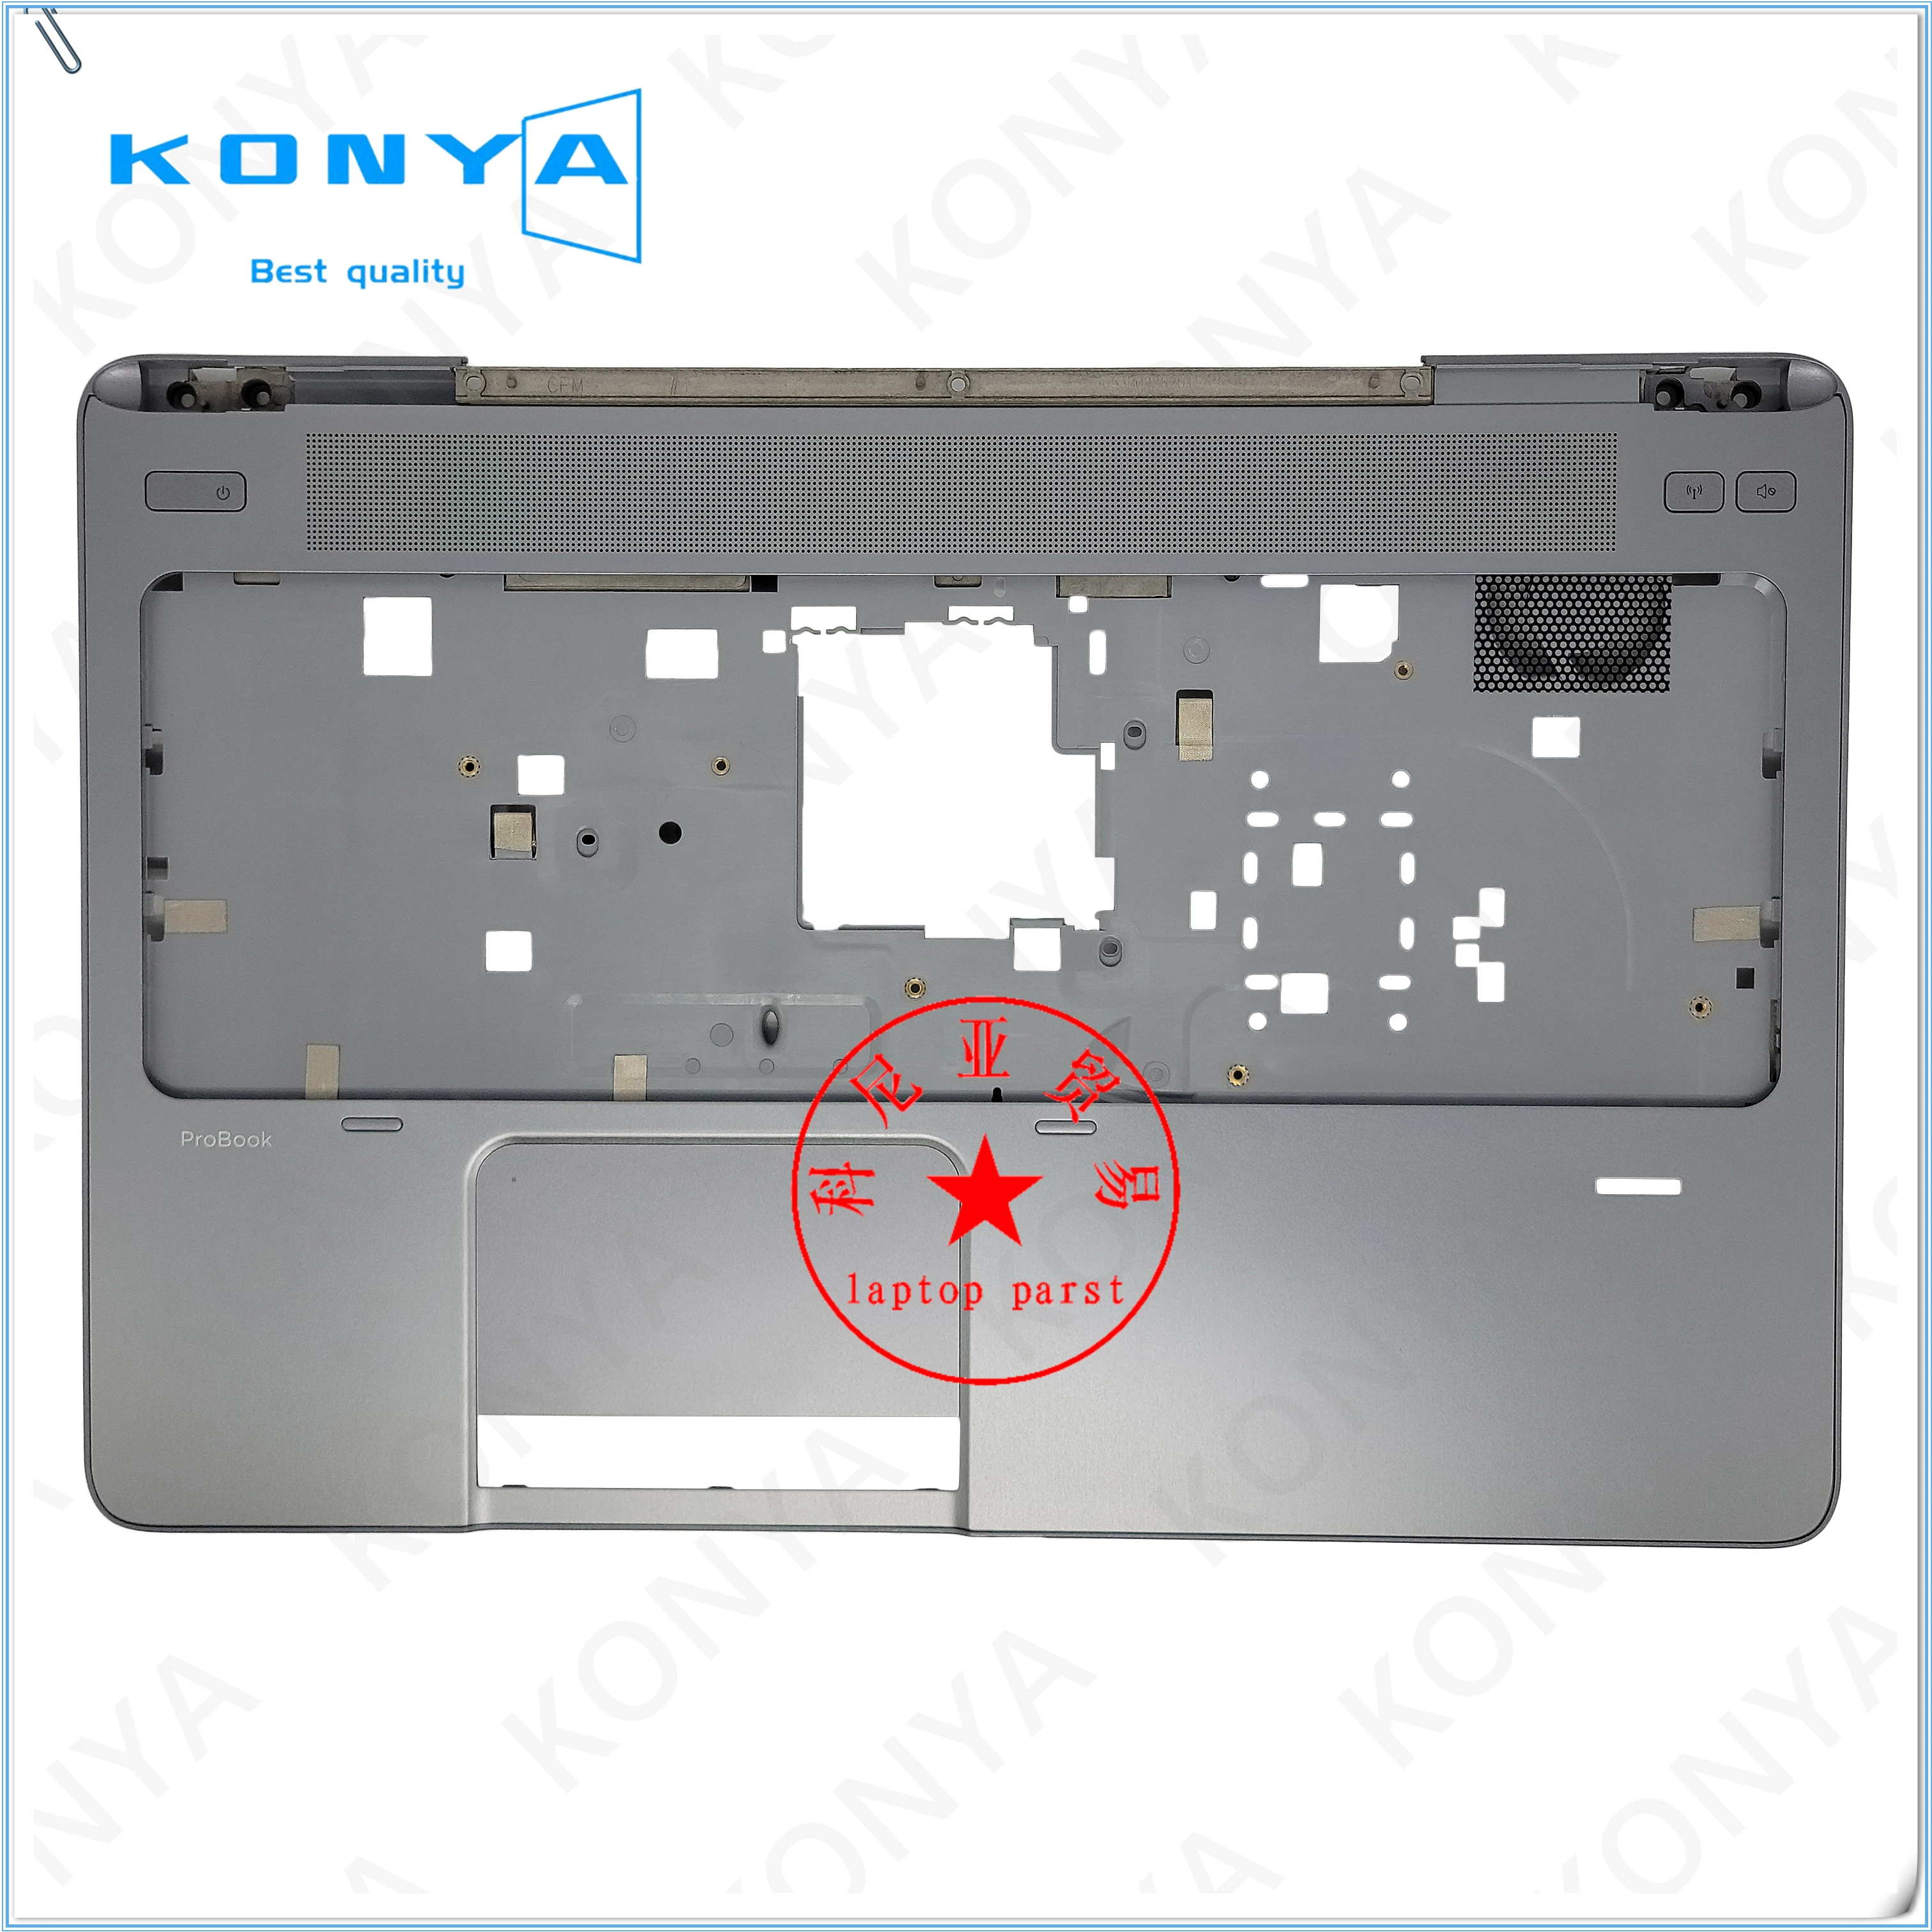 

New Original Laptop Upper Case Shell For HP ProBook 650 G1 655 G1 Palmrest Cover 745889-001 738708-001 745890-001 738709-001